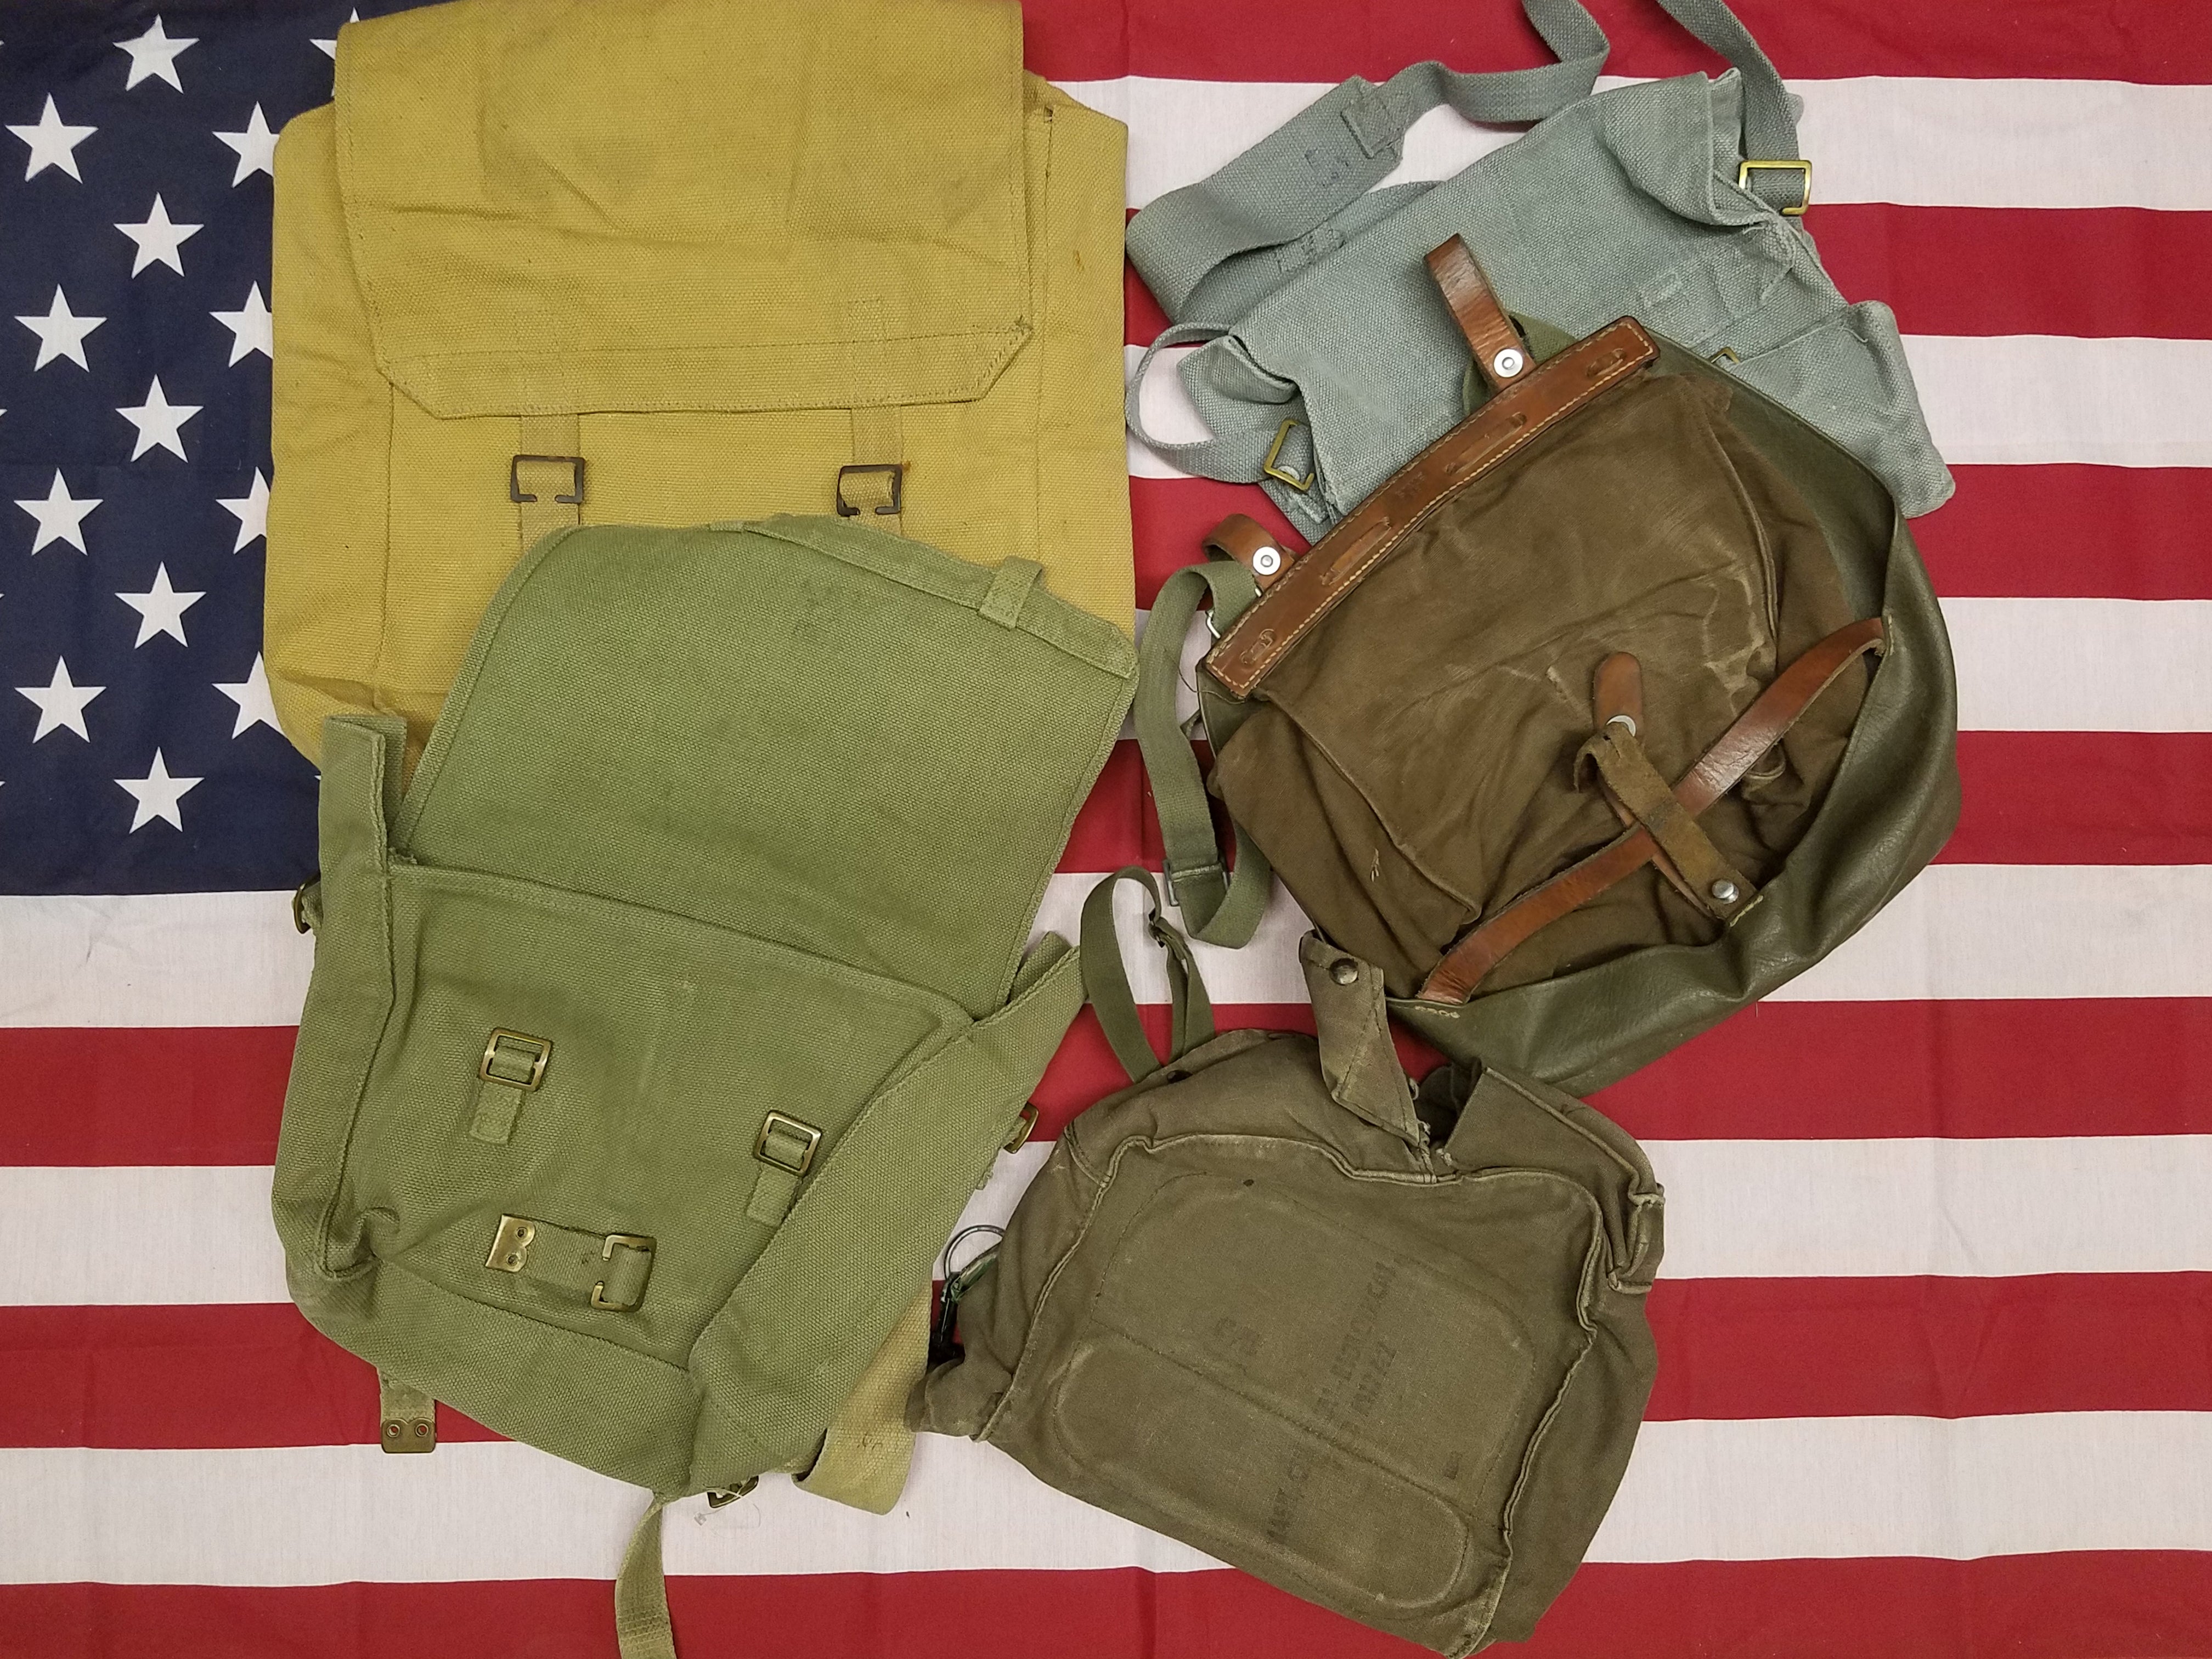 Vintage Army Bag Small Canvas Military Shoulder Bag 